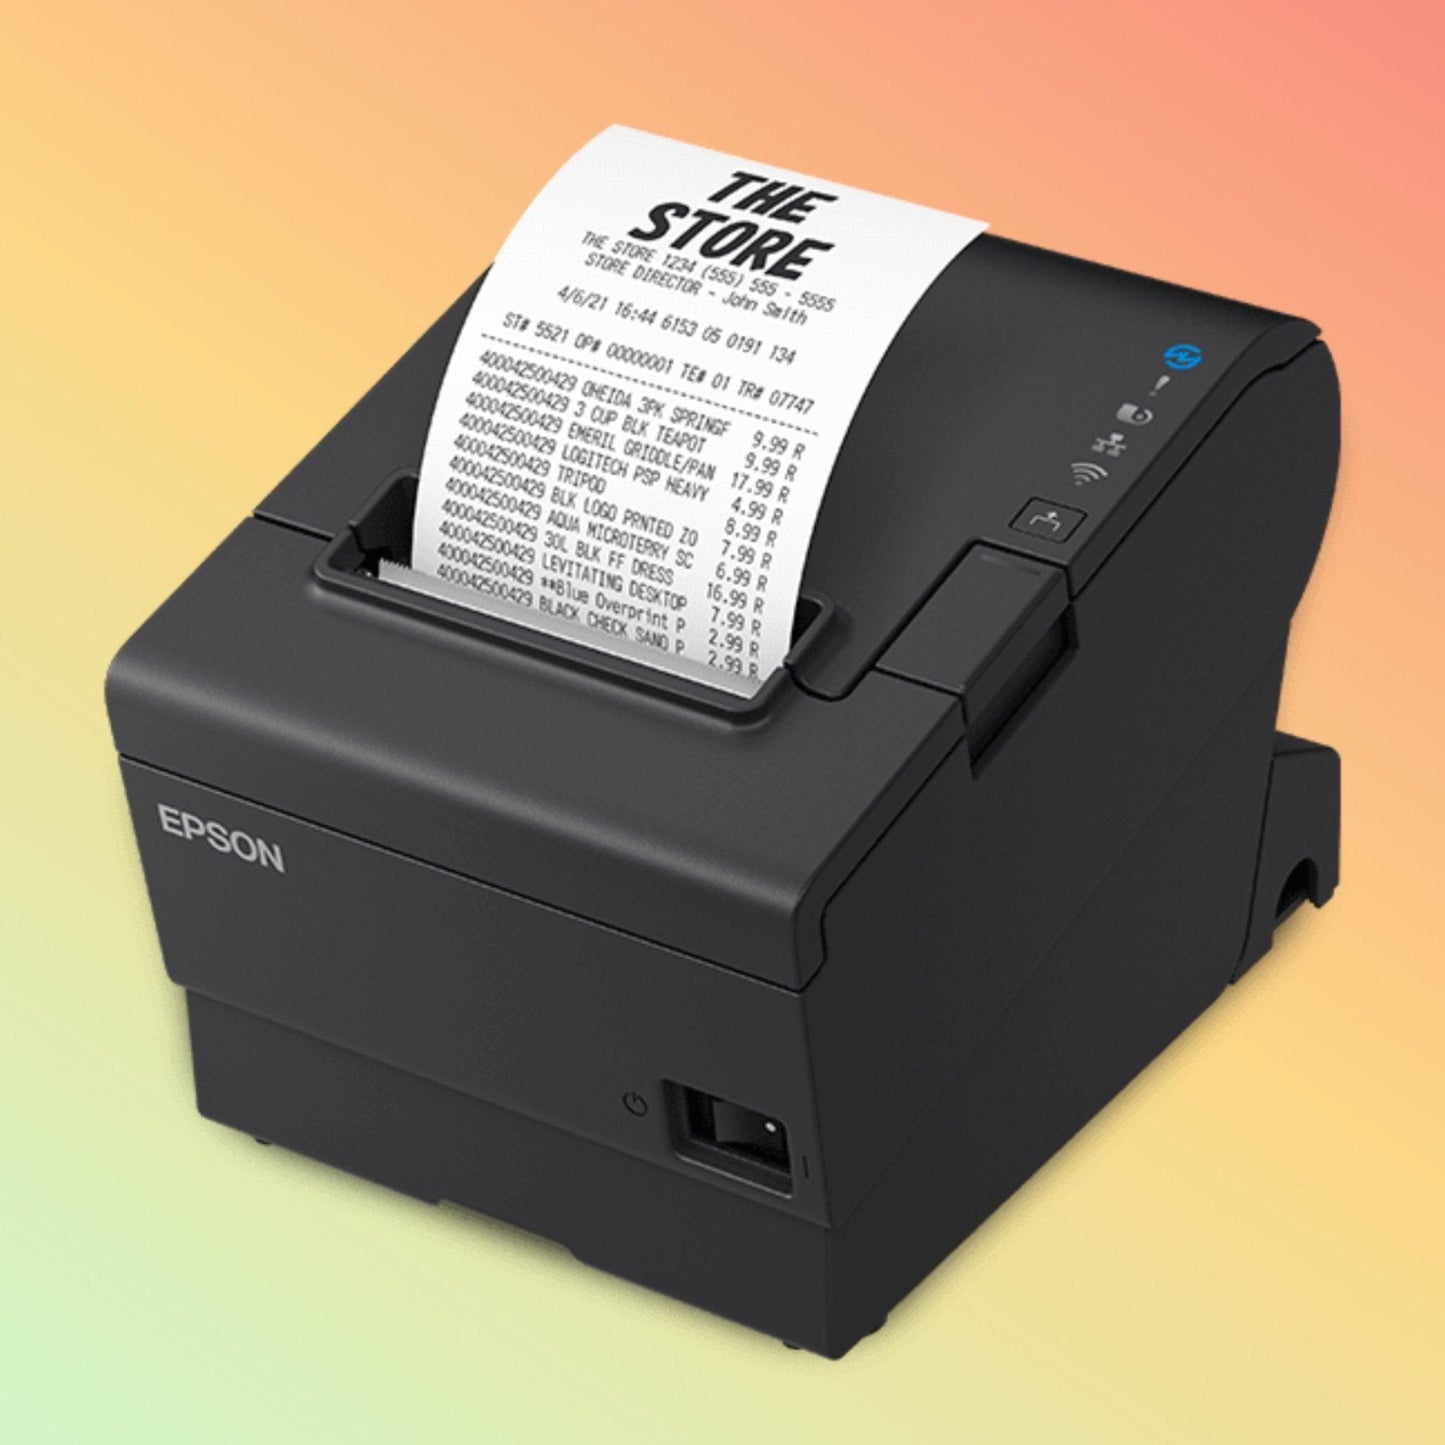 Epson TM-T88VII: Ultra-Fast, Eco-Friendly Receipt Printer